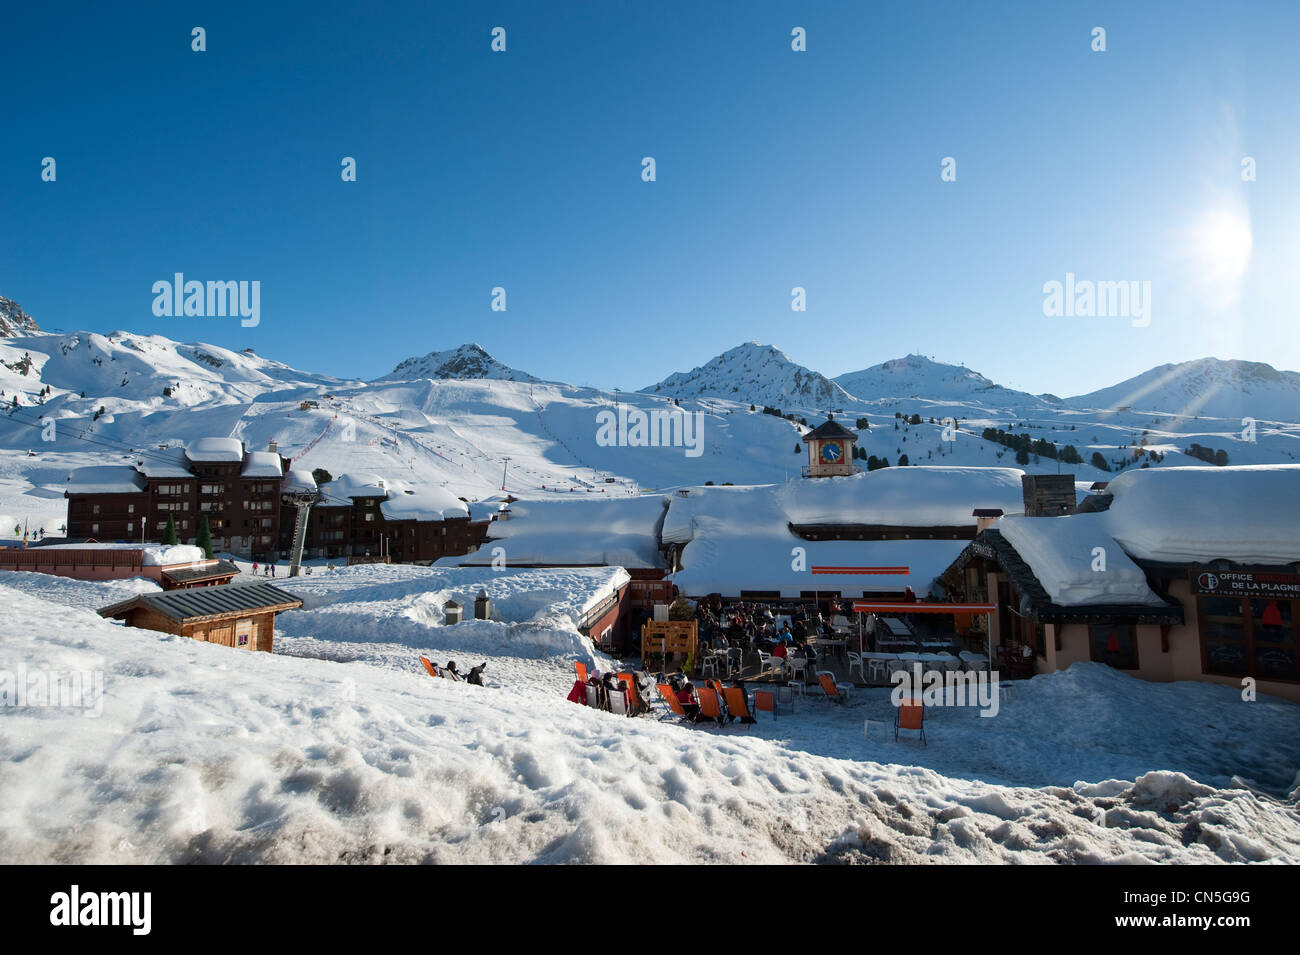 Belle plagne ski resort village hi-res stock photography and images - Alamy